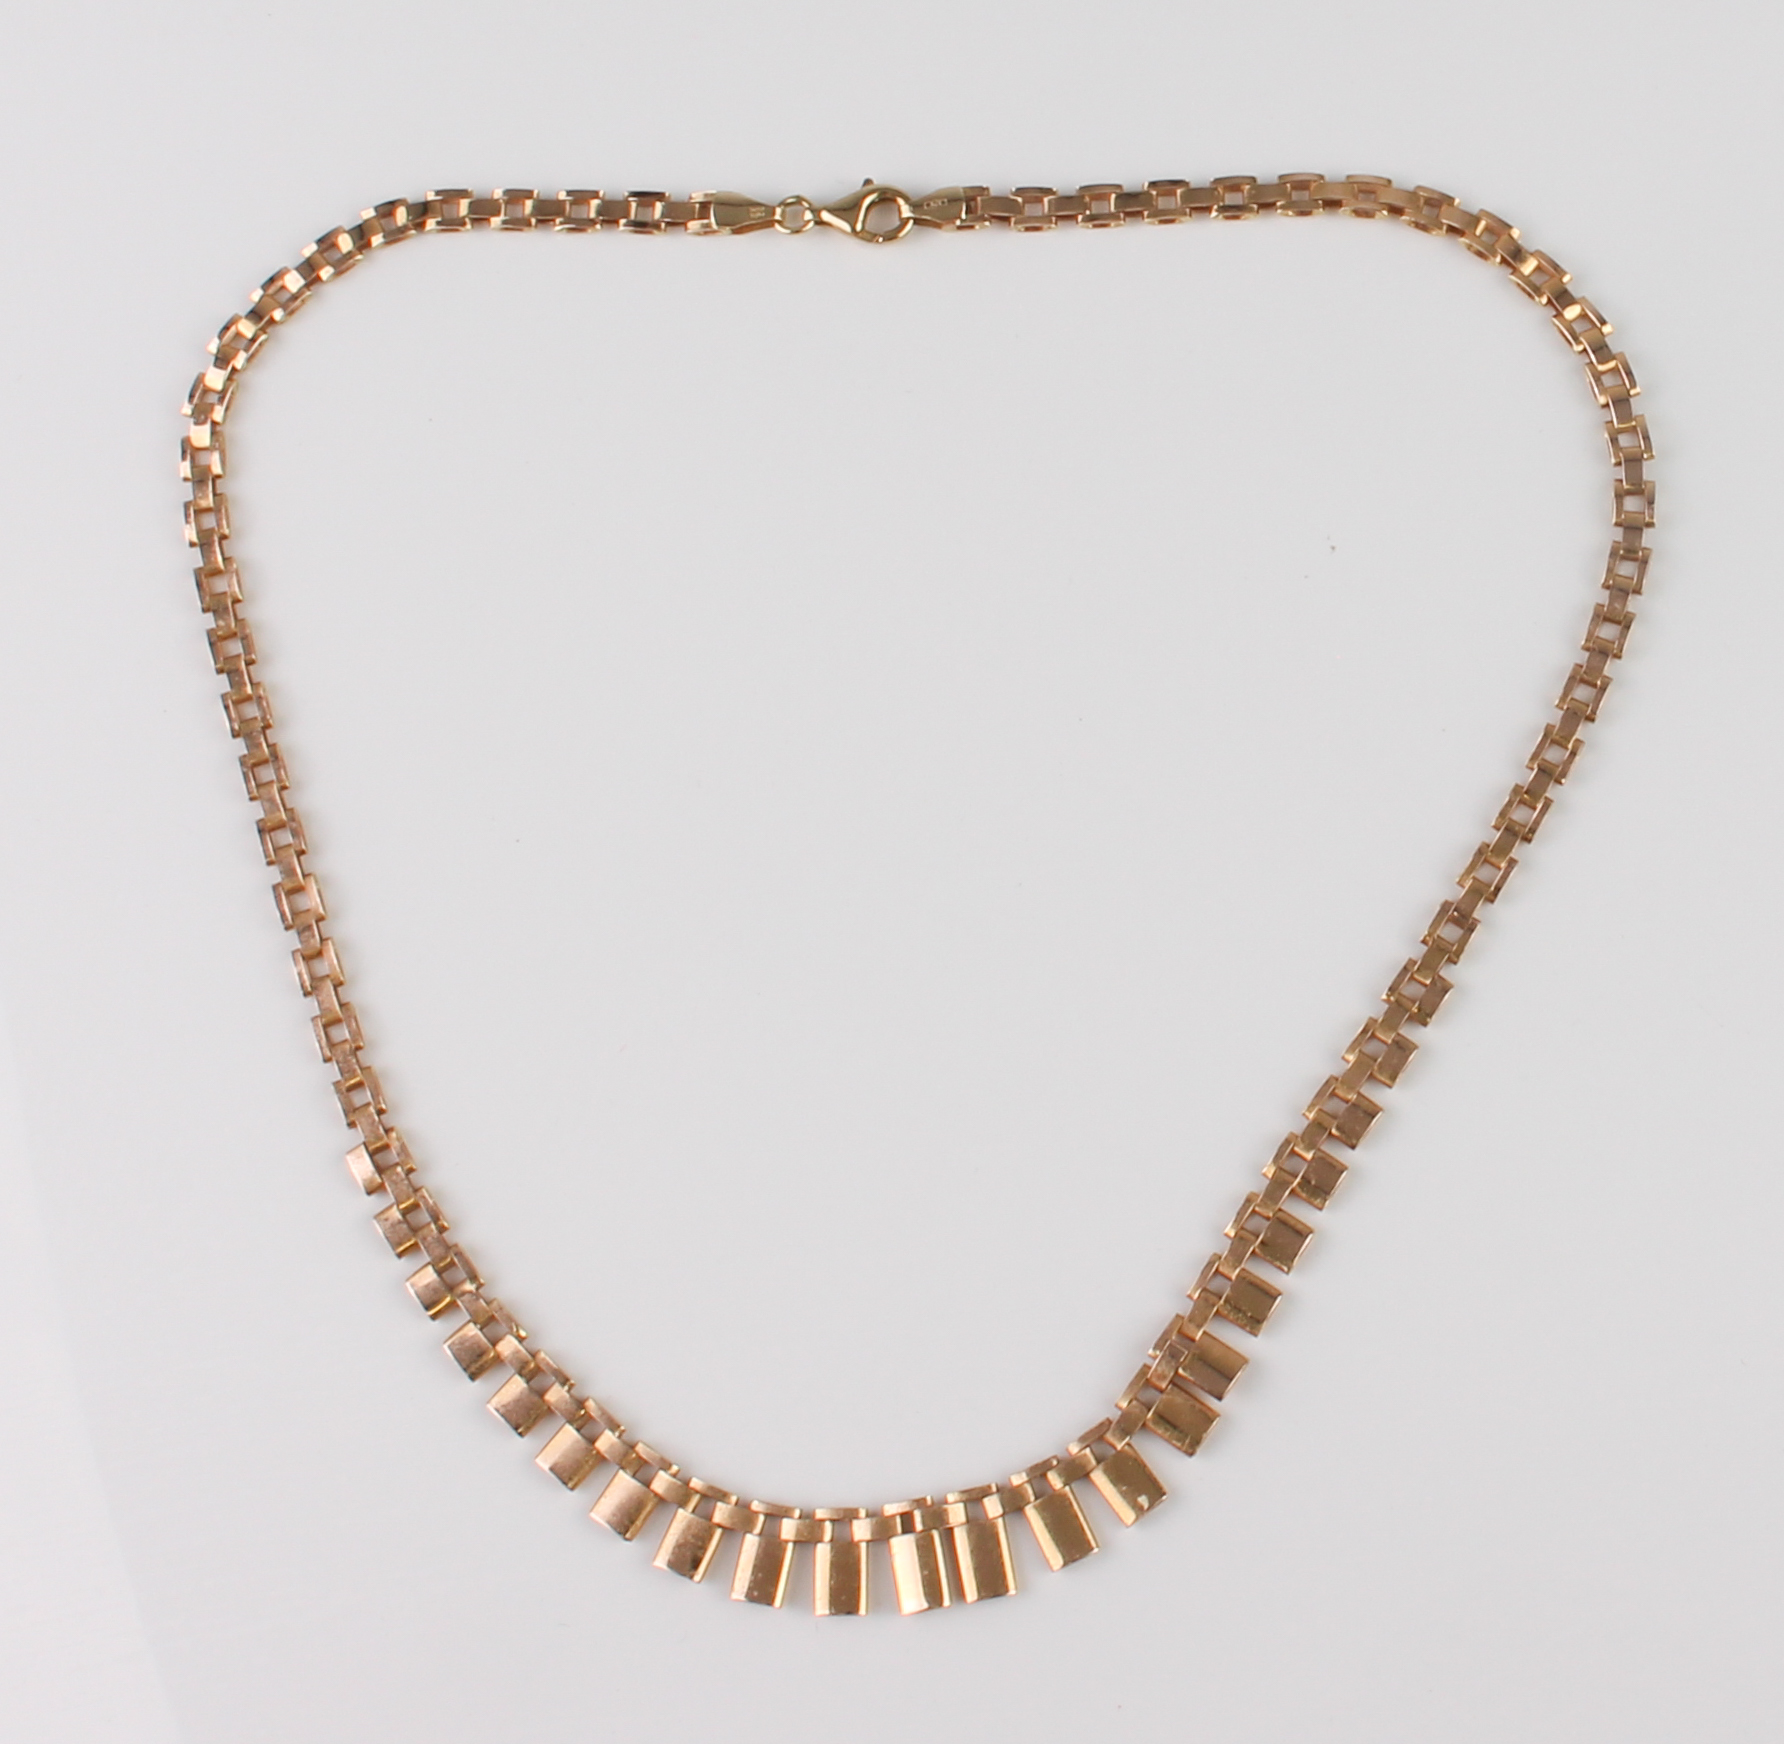 A vintage 9ct yellow gold fringe necklace - 1970s-80, Birmingham hallmarks, 43 cm  long. - Image 3 of 3